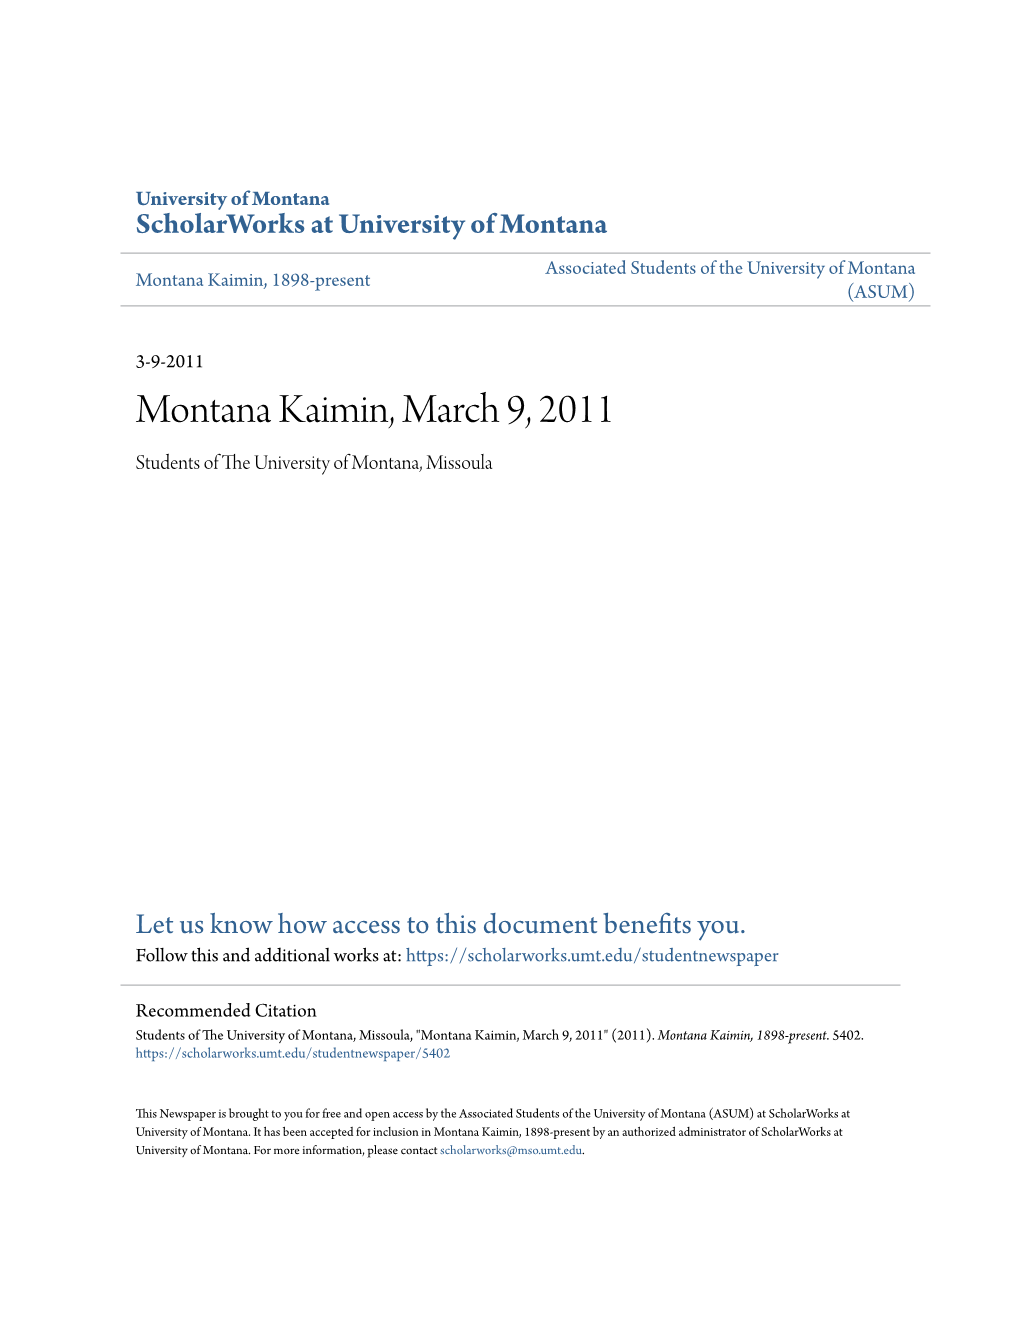 Montana Kaimin, March 9, 2011 Students of the Niu Versity of Montana, Missoula